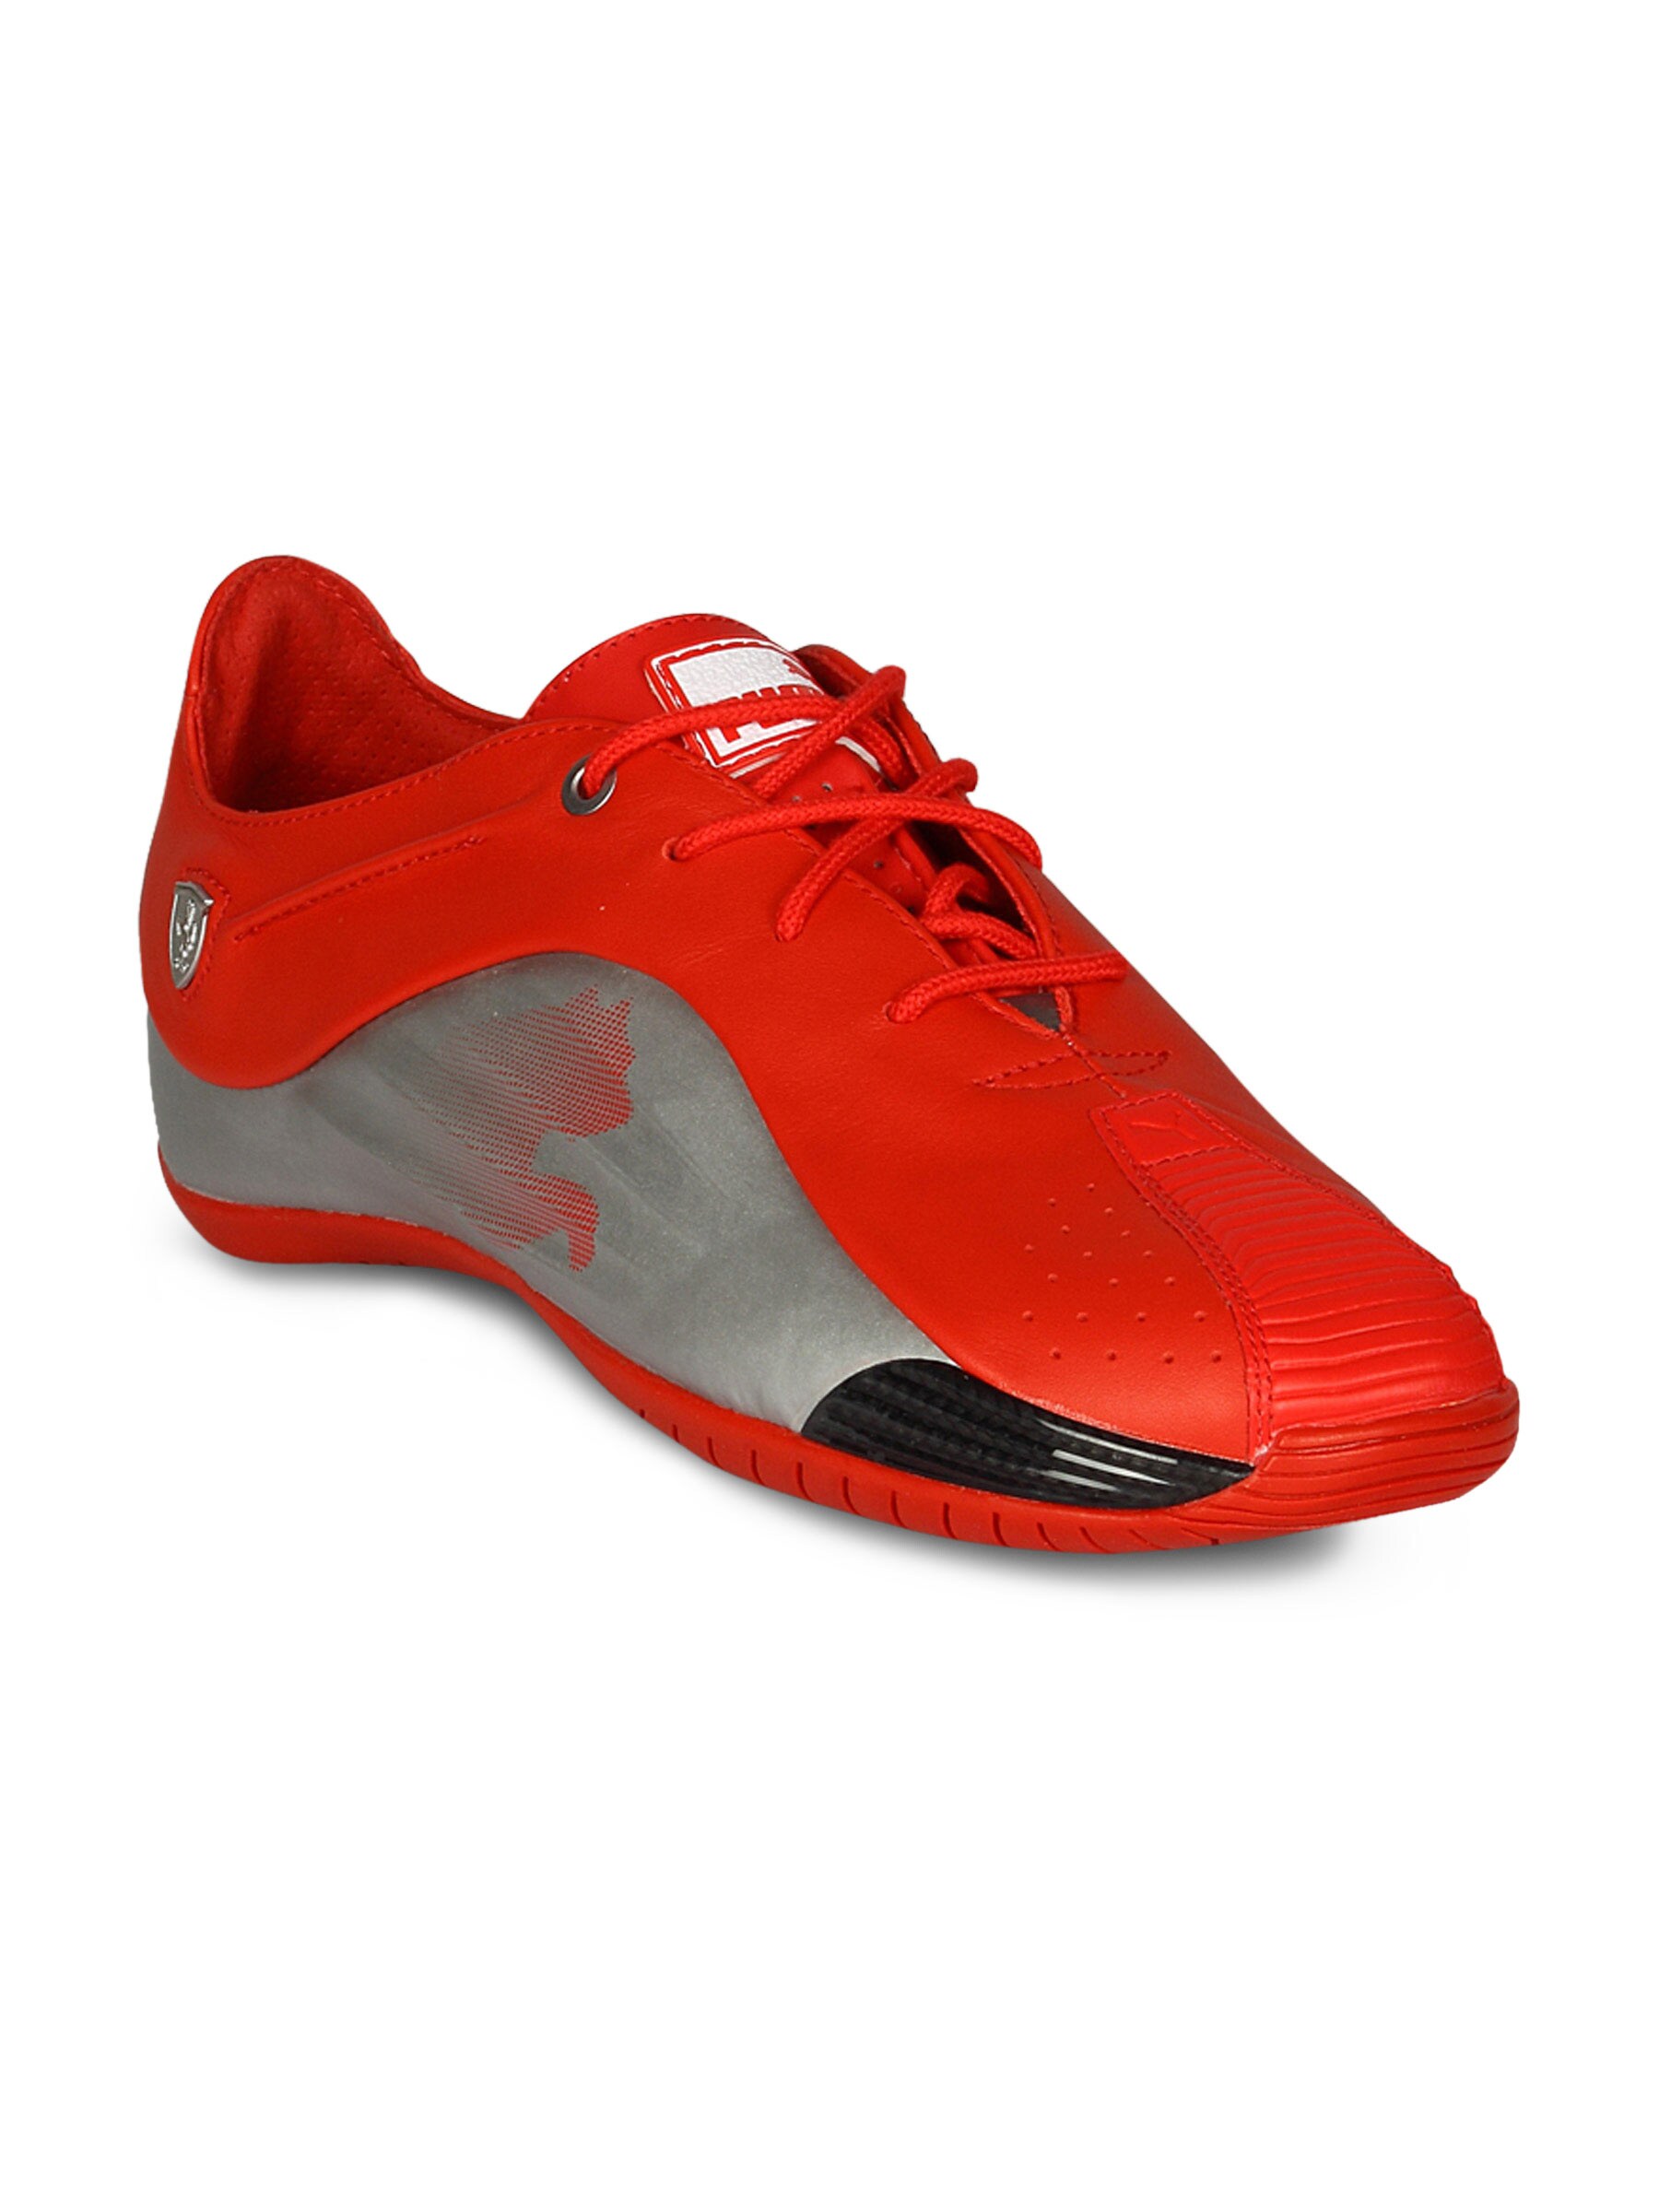 Puma Men's Kraftek Metallic Silver Red Shoe